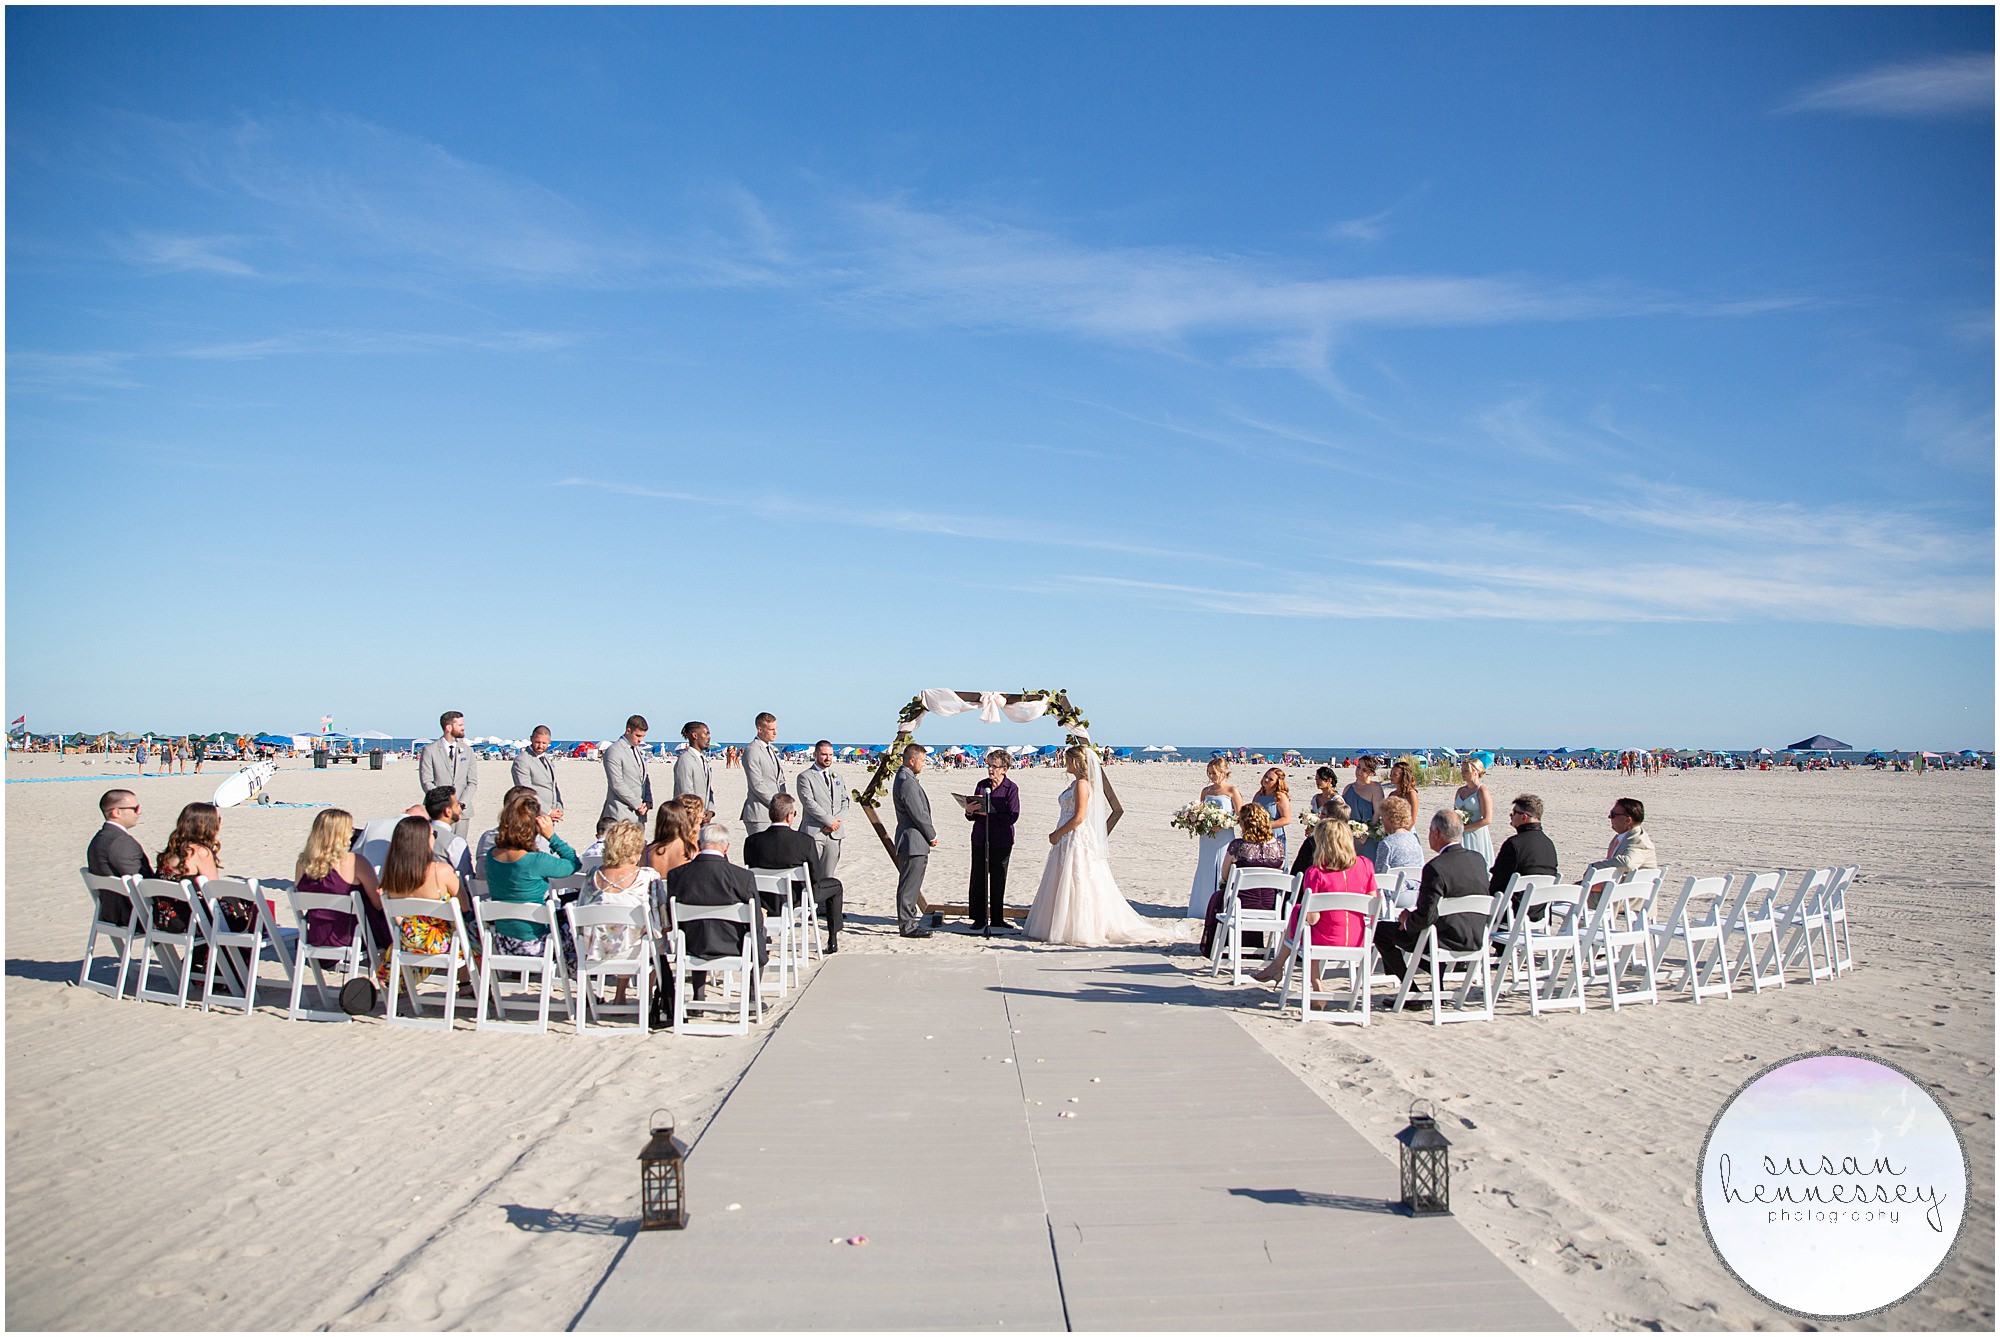 Susan Hennessey Photography Best of 2020 Weddings - Beach ceremony at ICONA Diamond Beach wedding